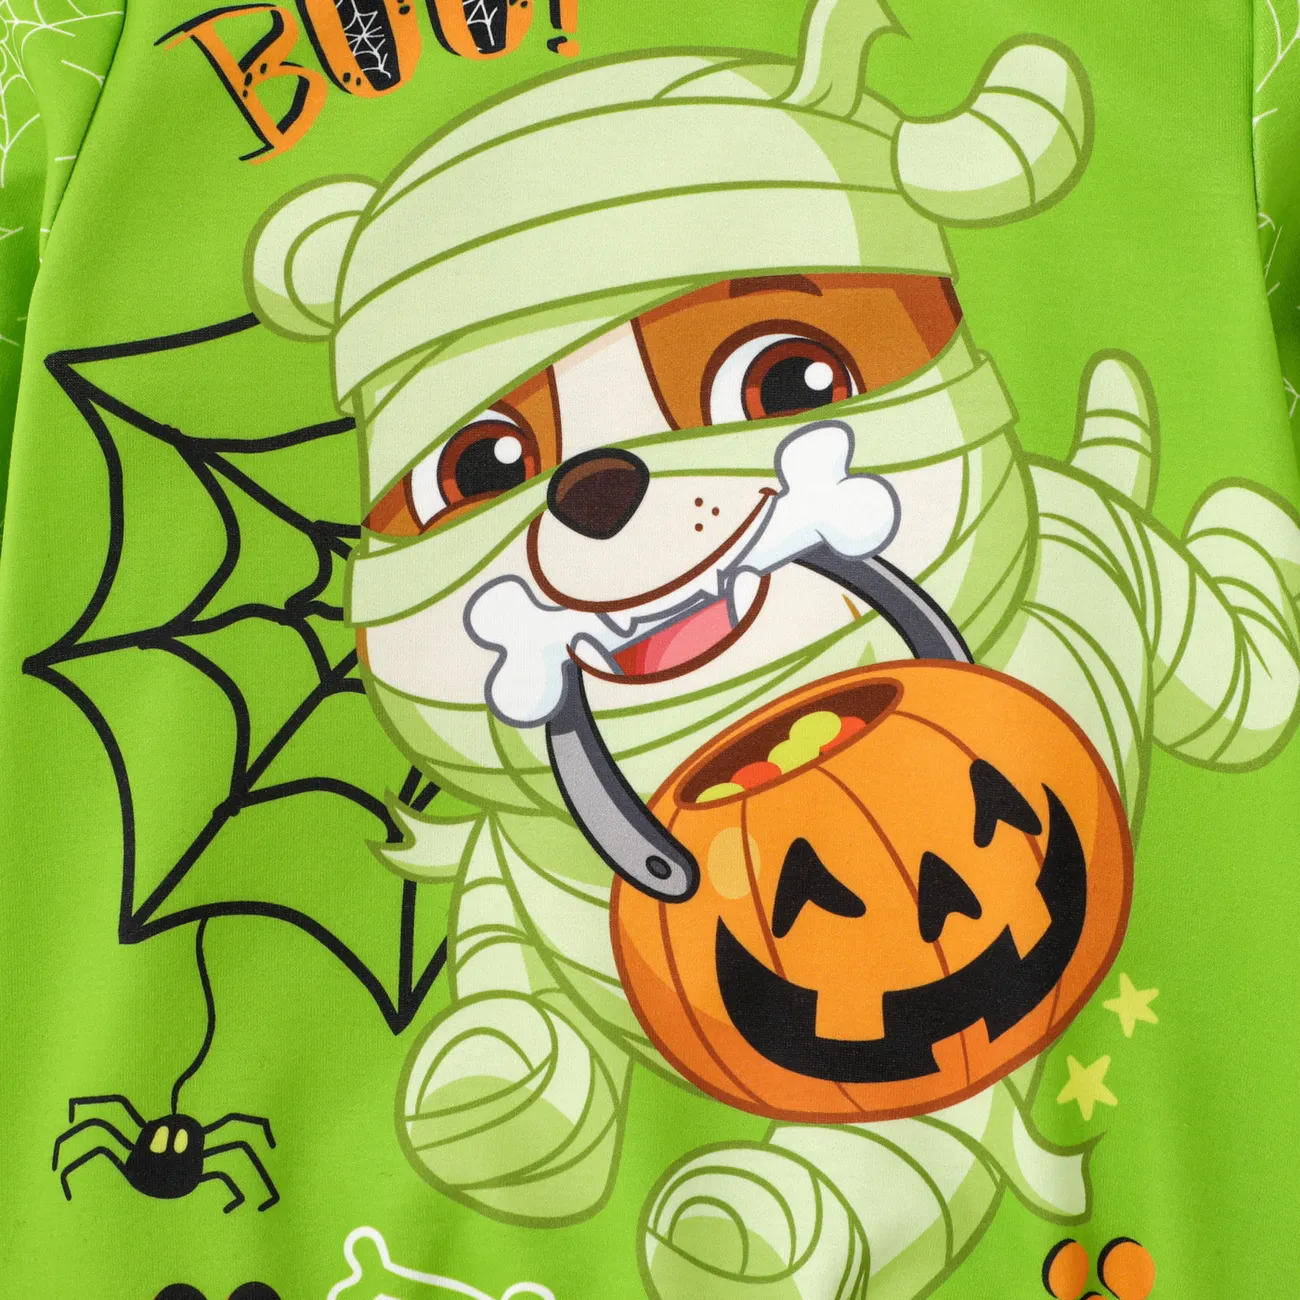 PAW Patrol Halloween Toddler Girl/Boy Character Print Long-sleeve Pullover Sweatshirt  Green big image 1